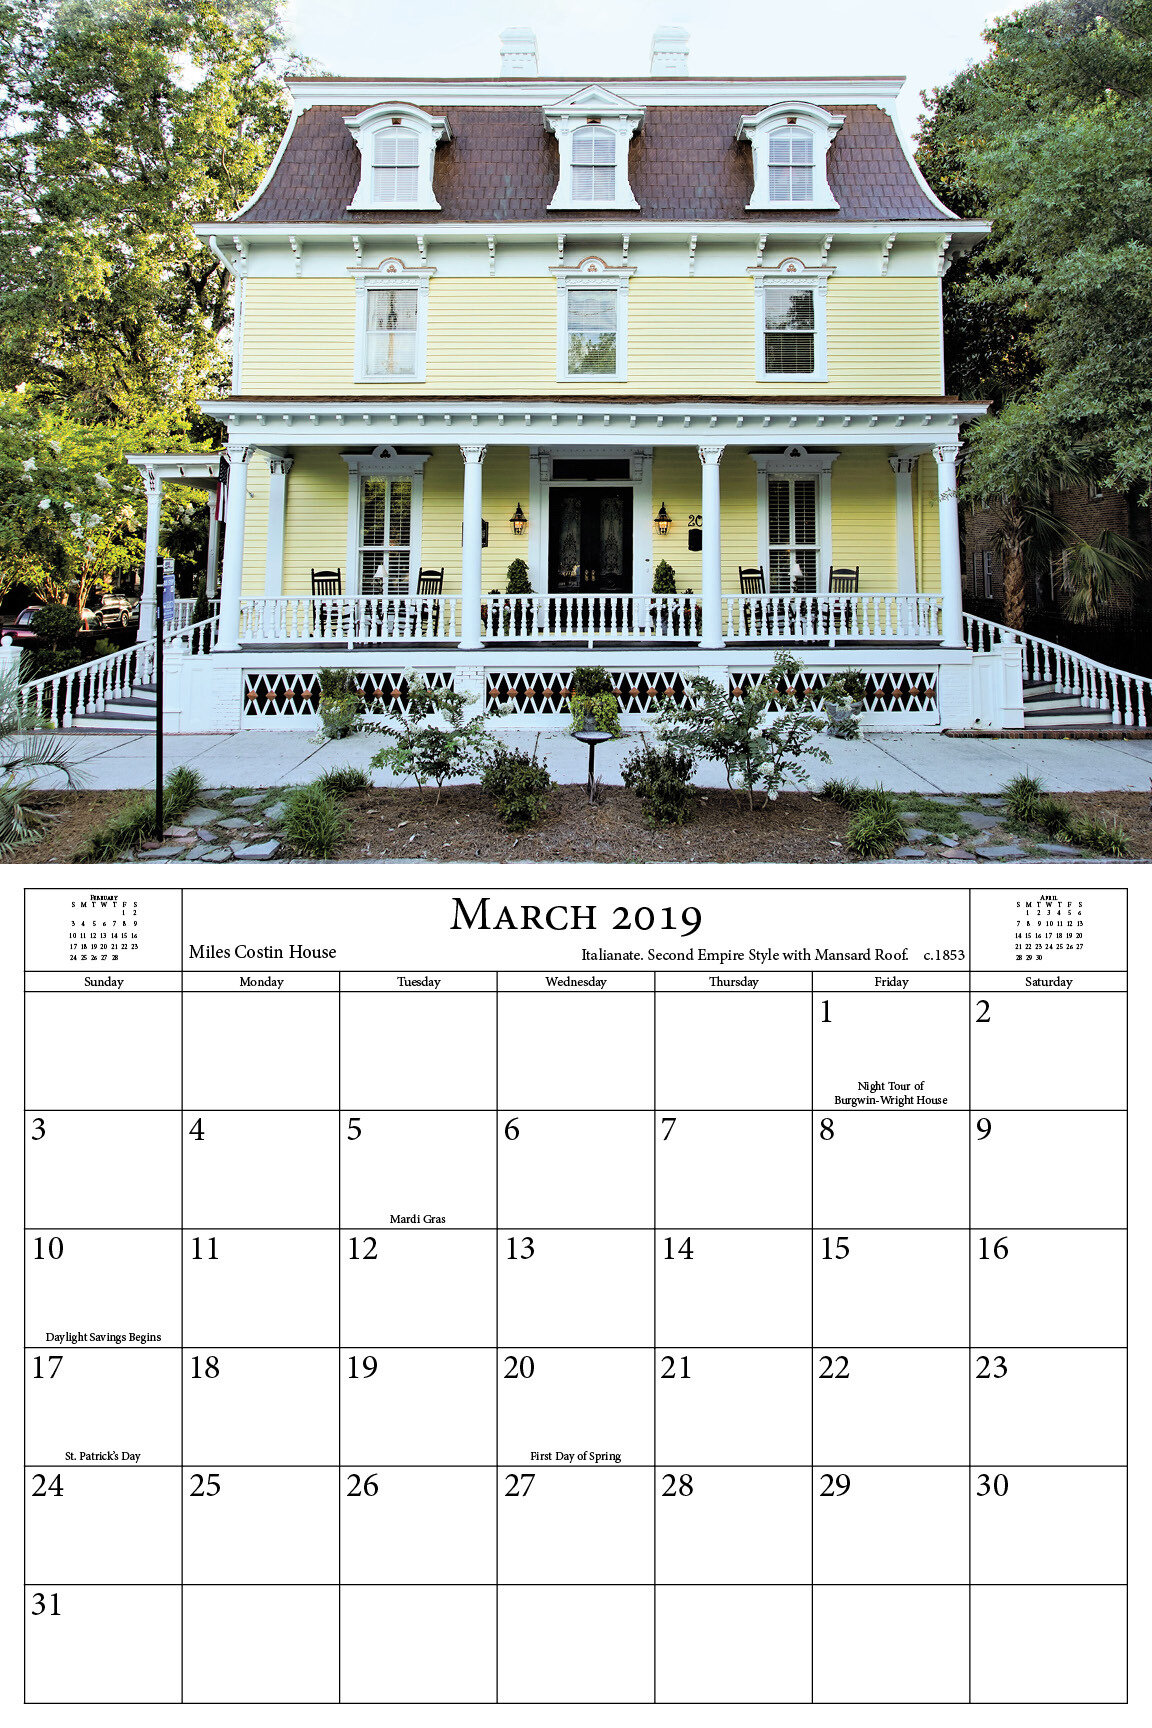 Wilmington Calendar 2019 Desgin by Cybergraph Photos by Michael Smith4.jpg